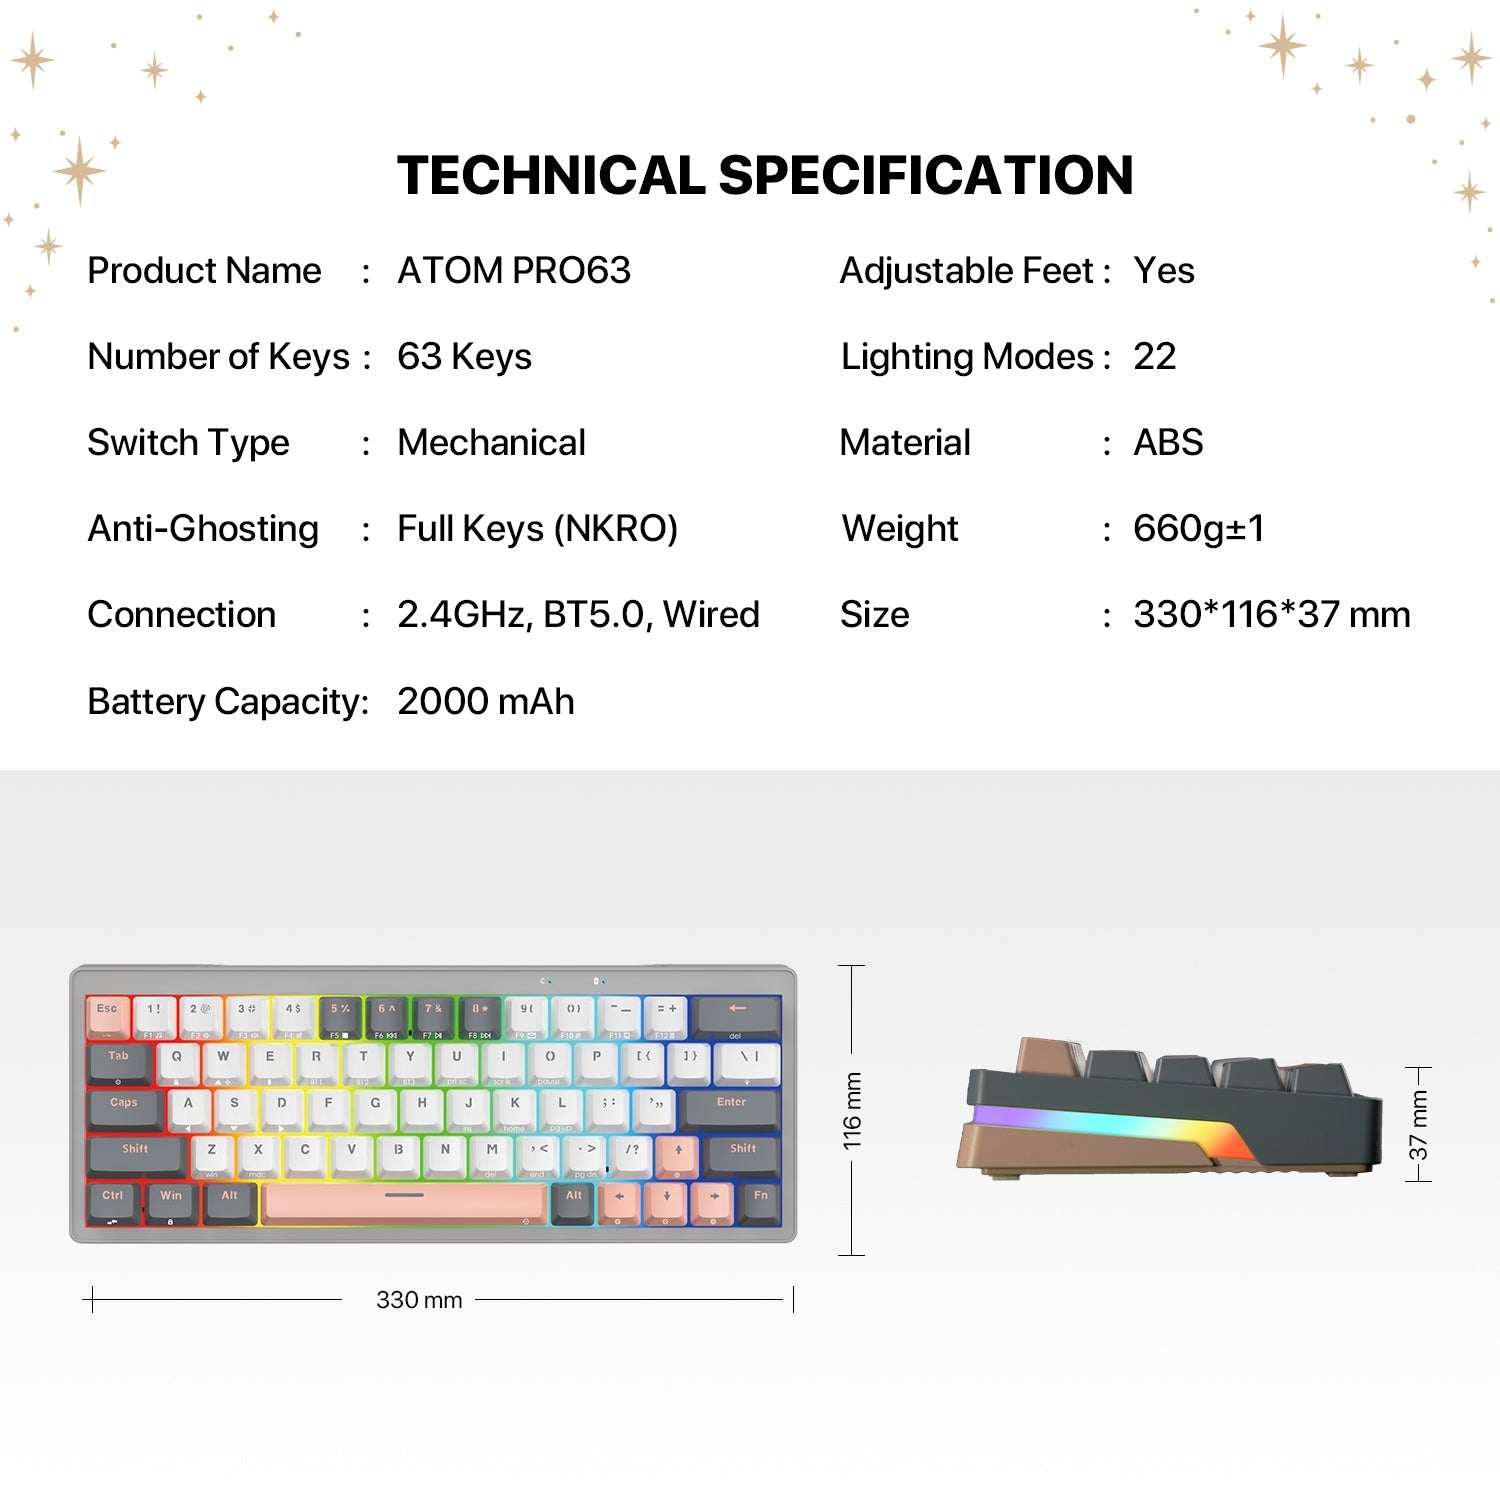 Fantech MK912 ATOM PRO63 RGB Bluetooth, Wireless Gaming keyboard Saturn